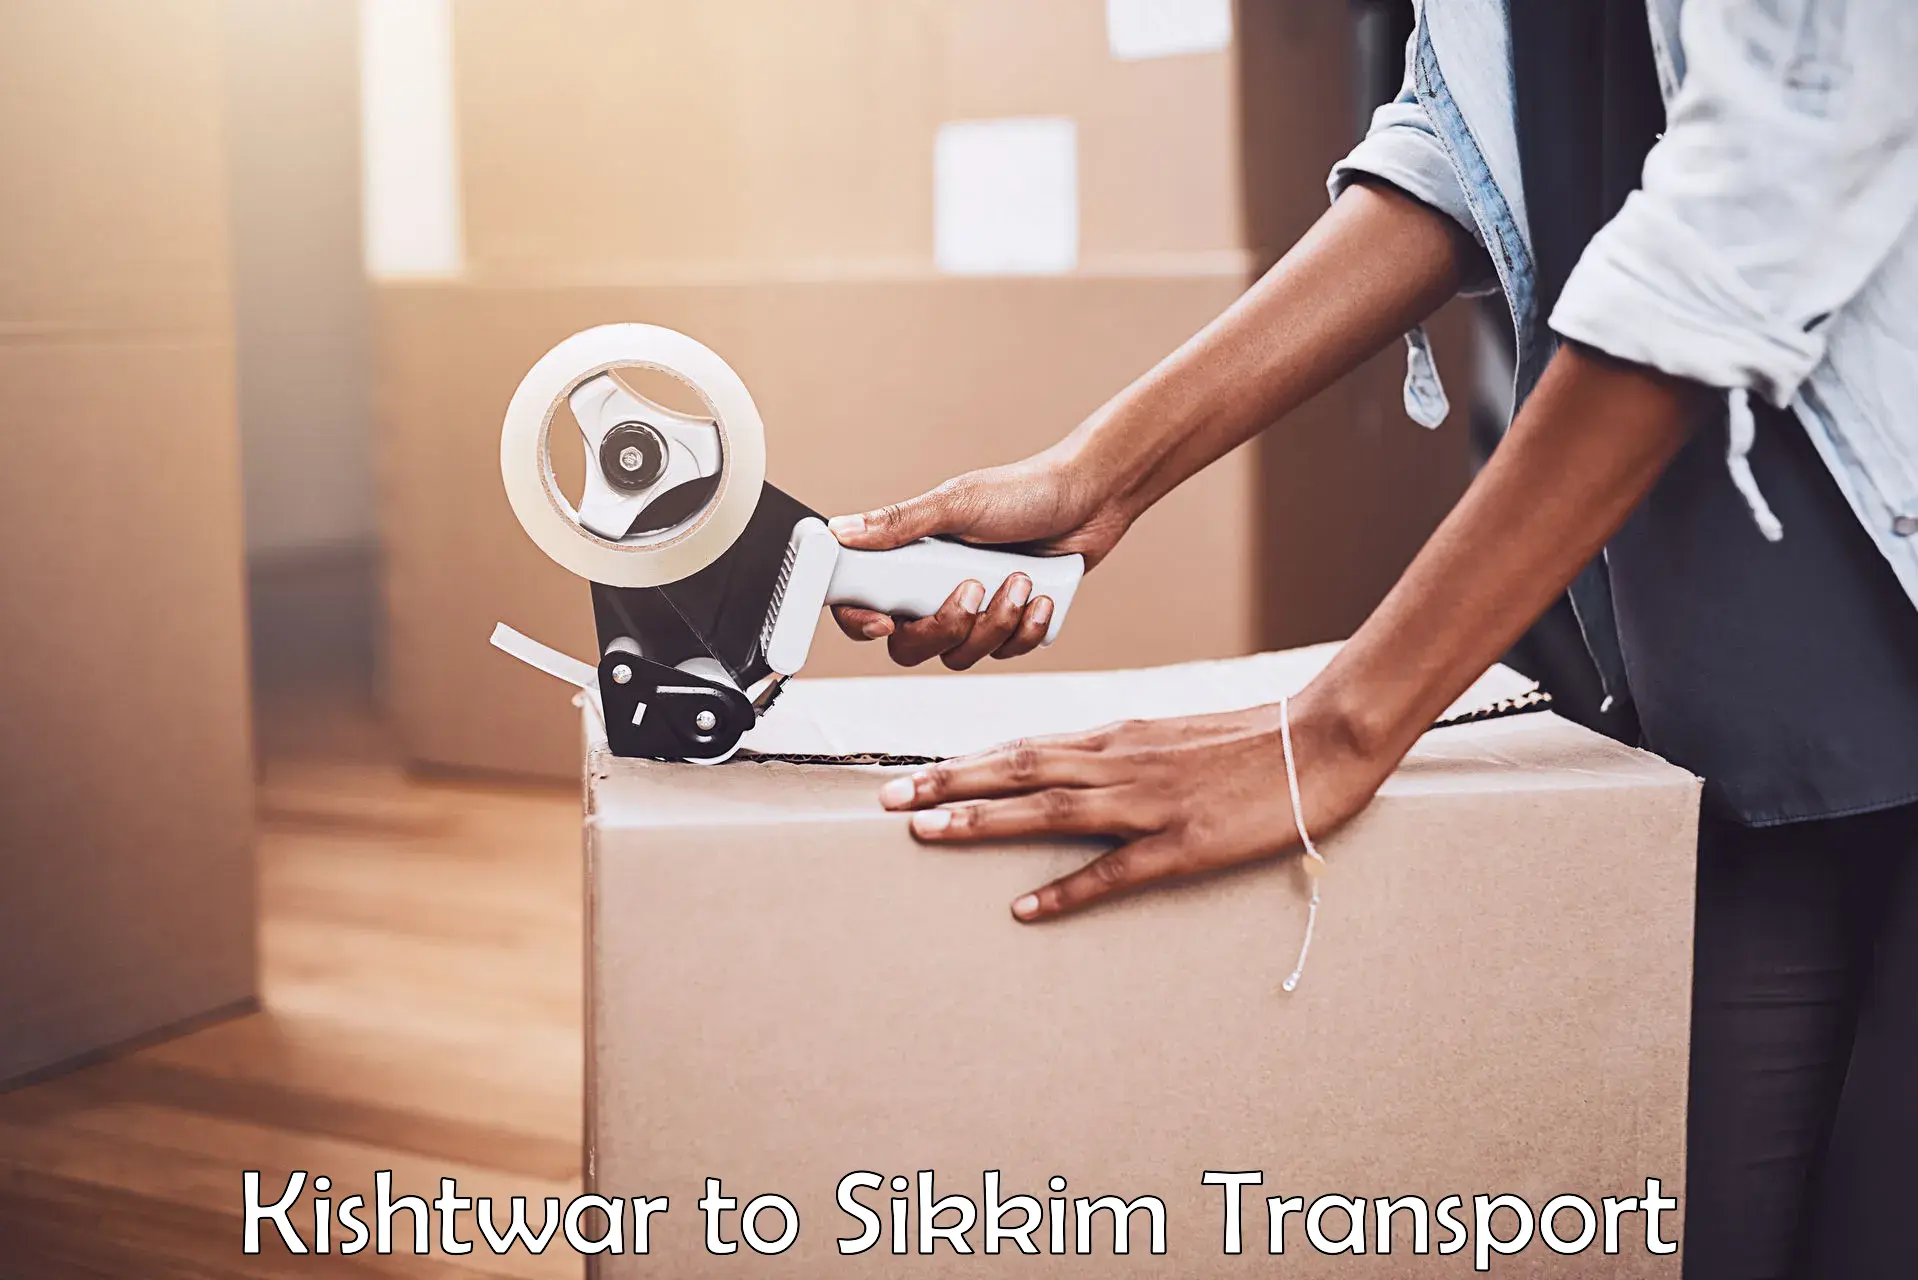 Online transport service Kishtwar to Sikkim